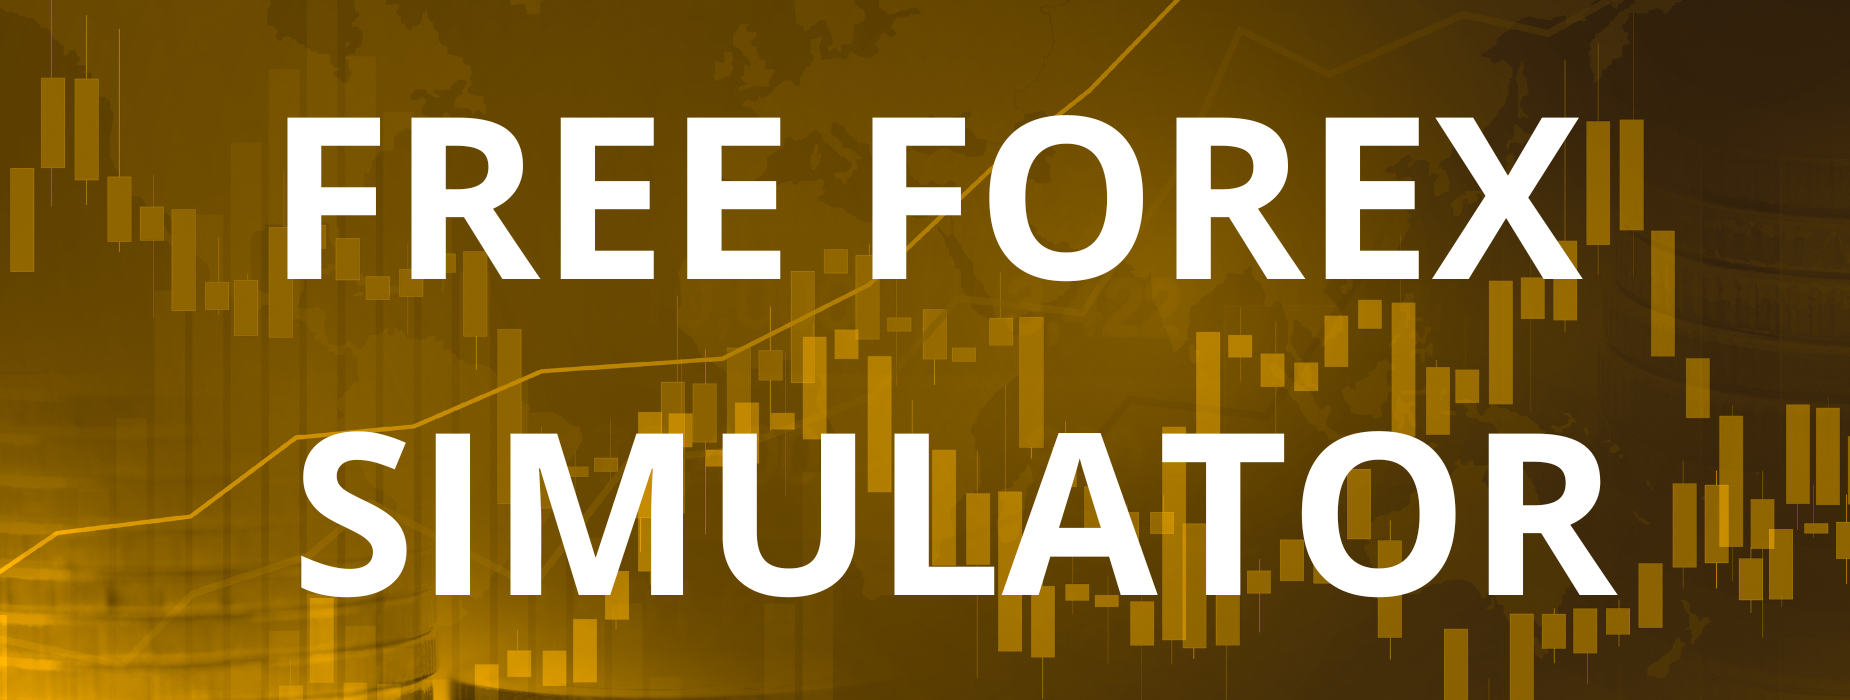 free forex simulator